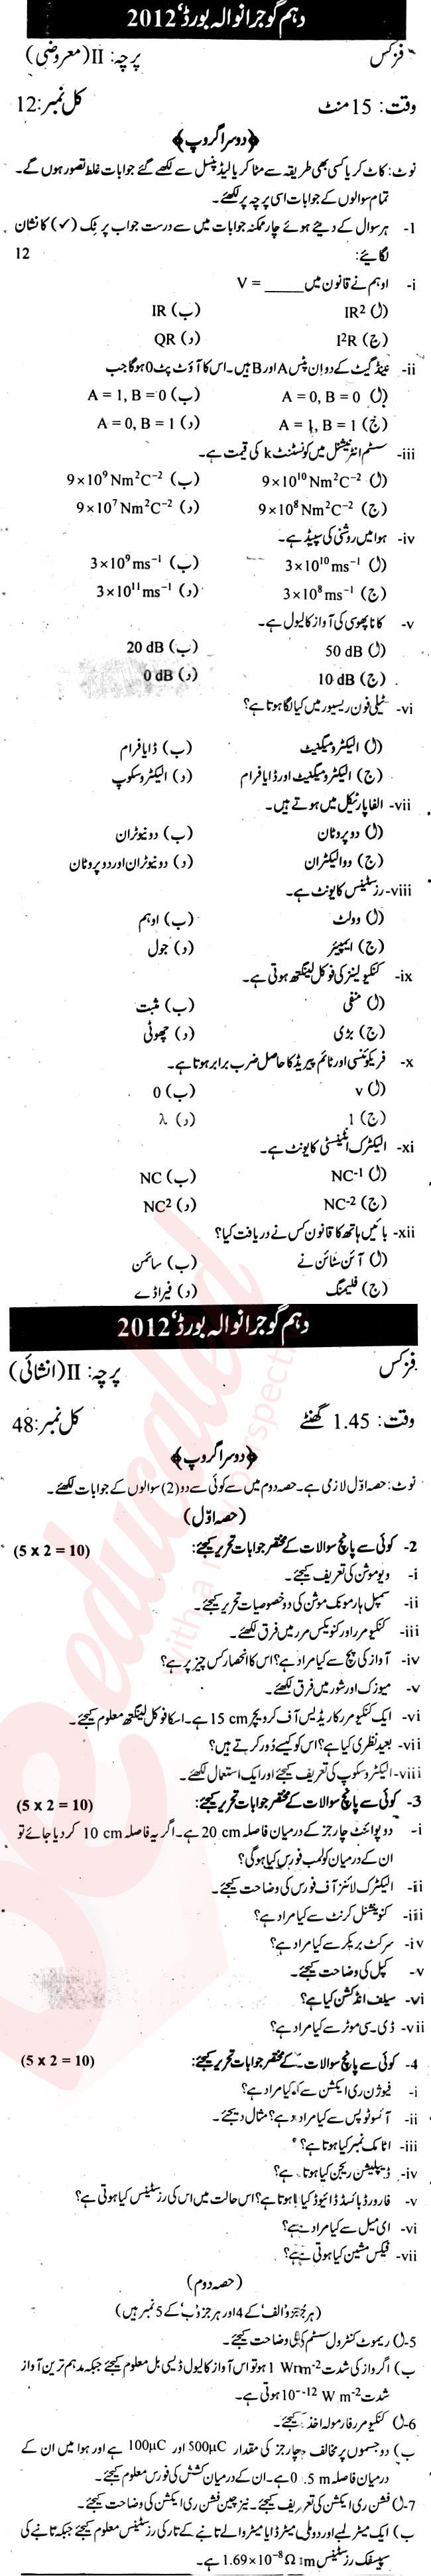 Physics 10th Urdu Medium Past Paper Group 2 BISE Gujranwala 2012